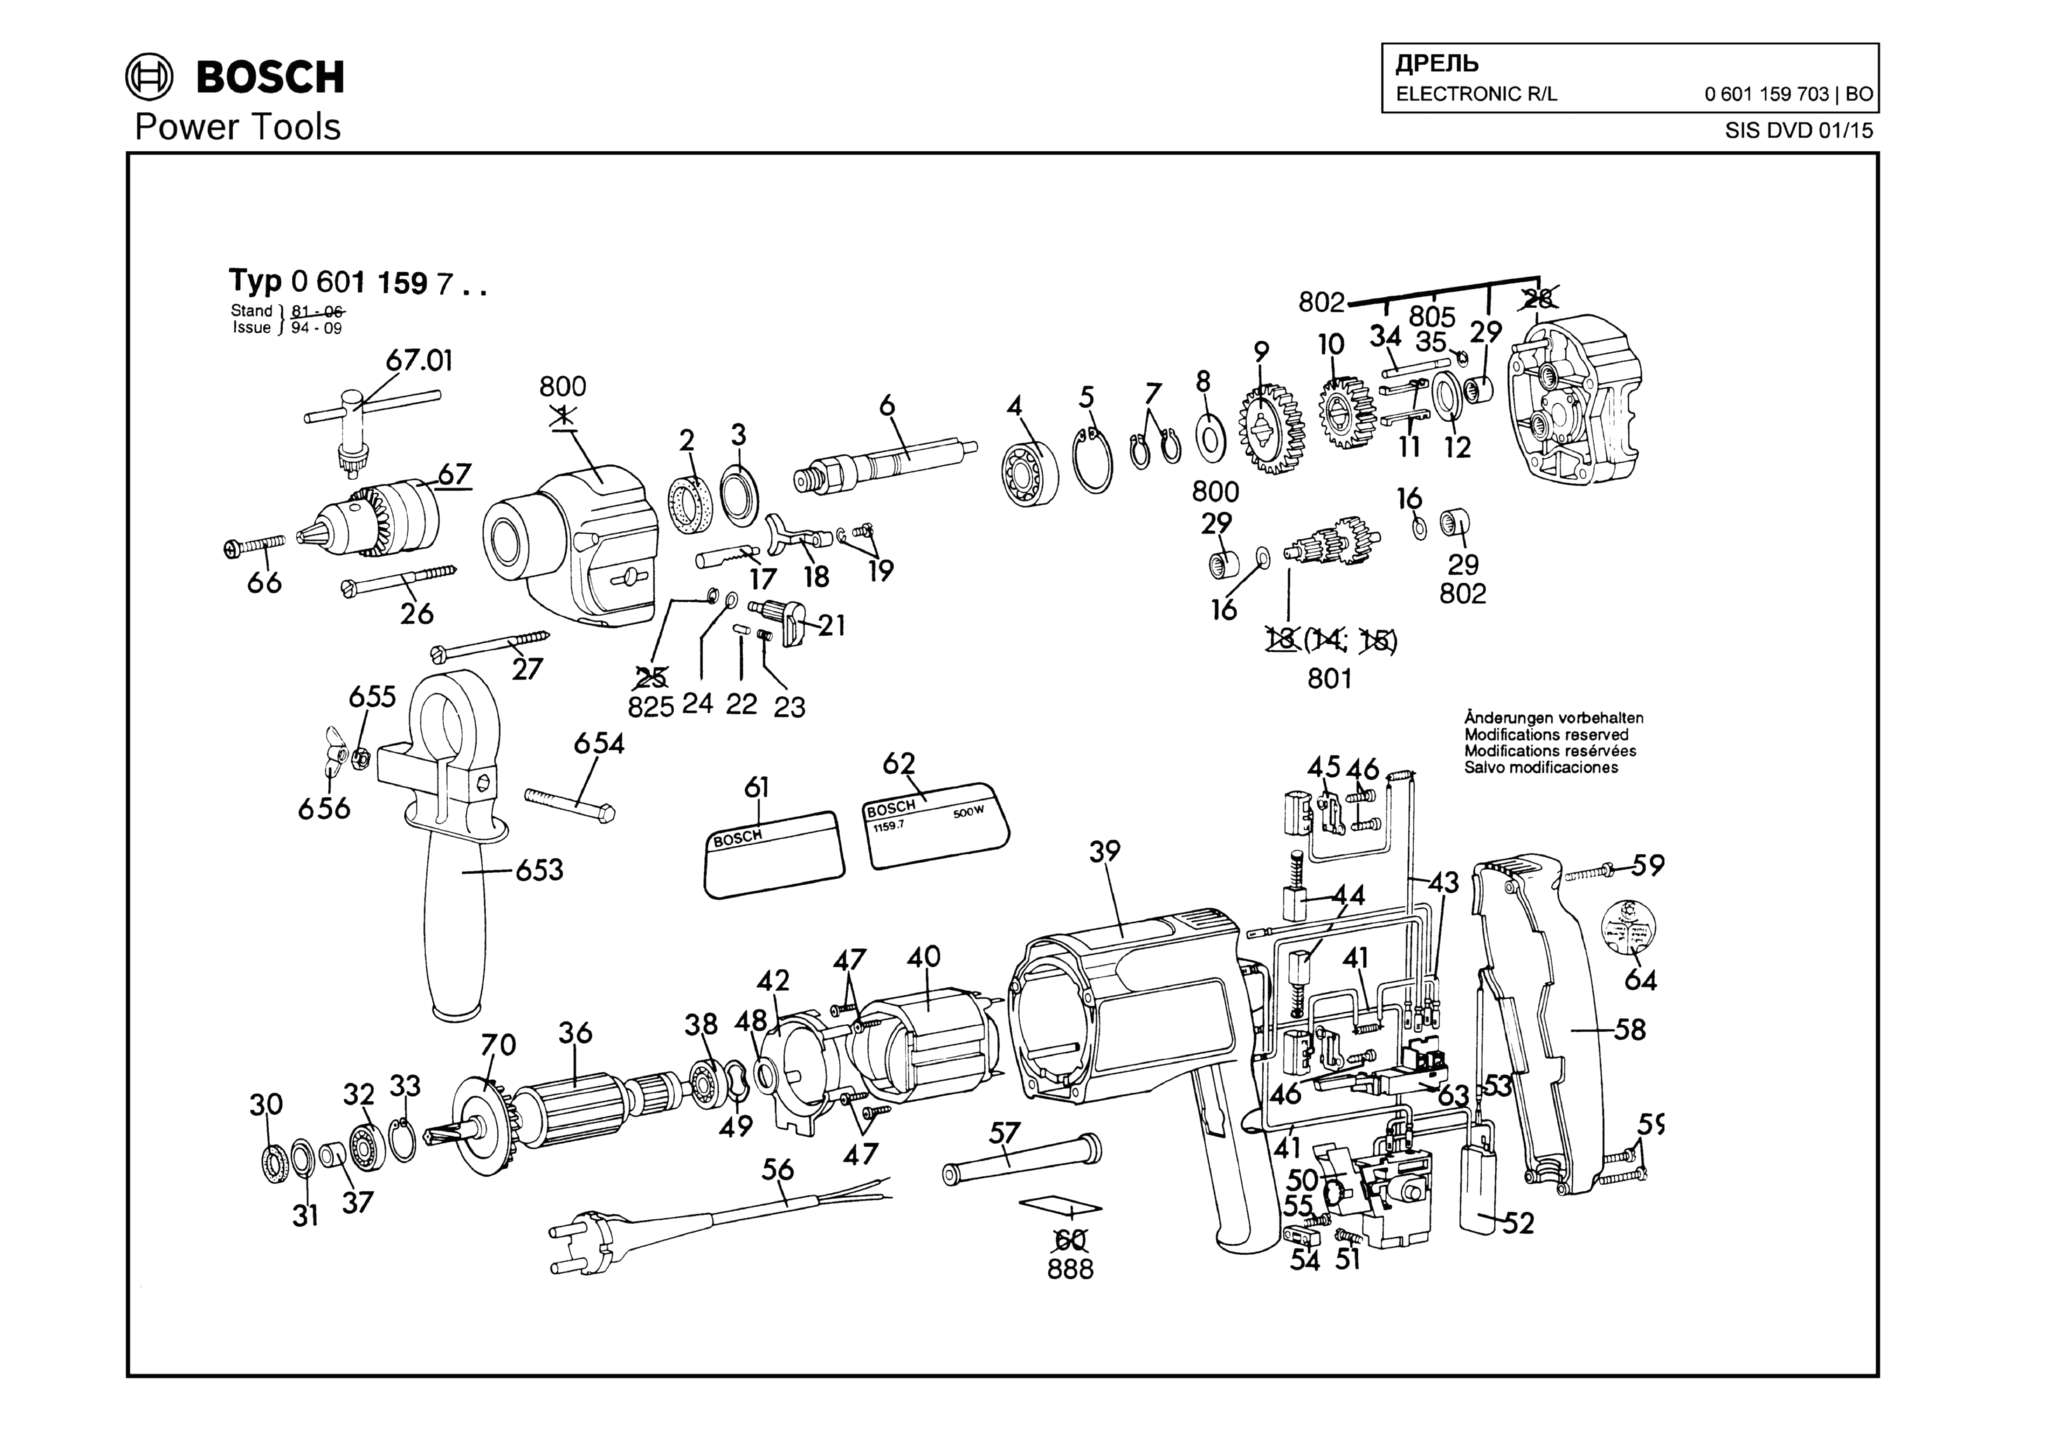 Запчасти, схема и деталировка Bosch ELECTRONIC R/L (ТИП 0601159703)